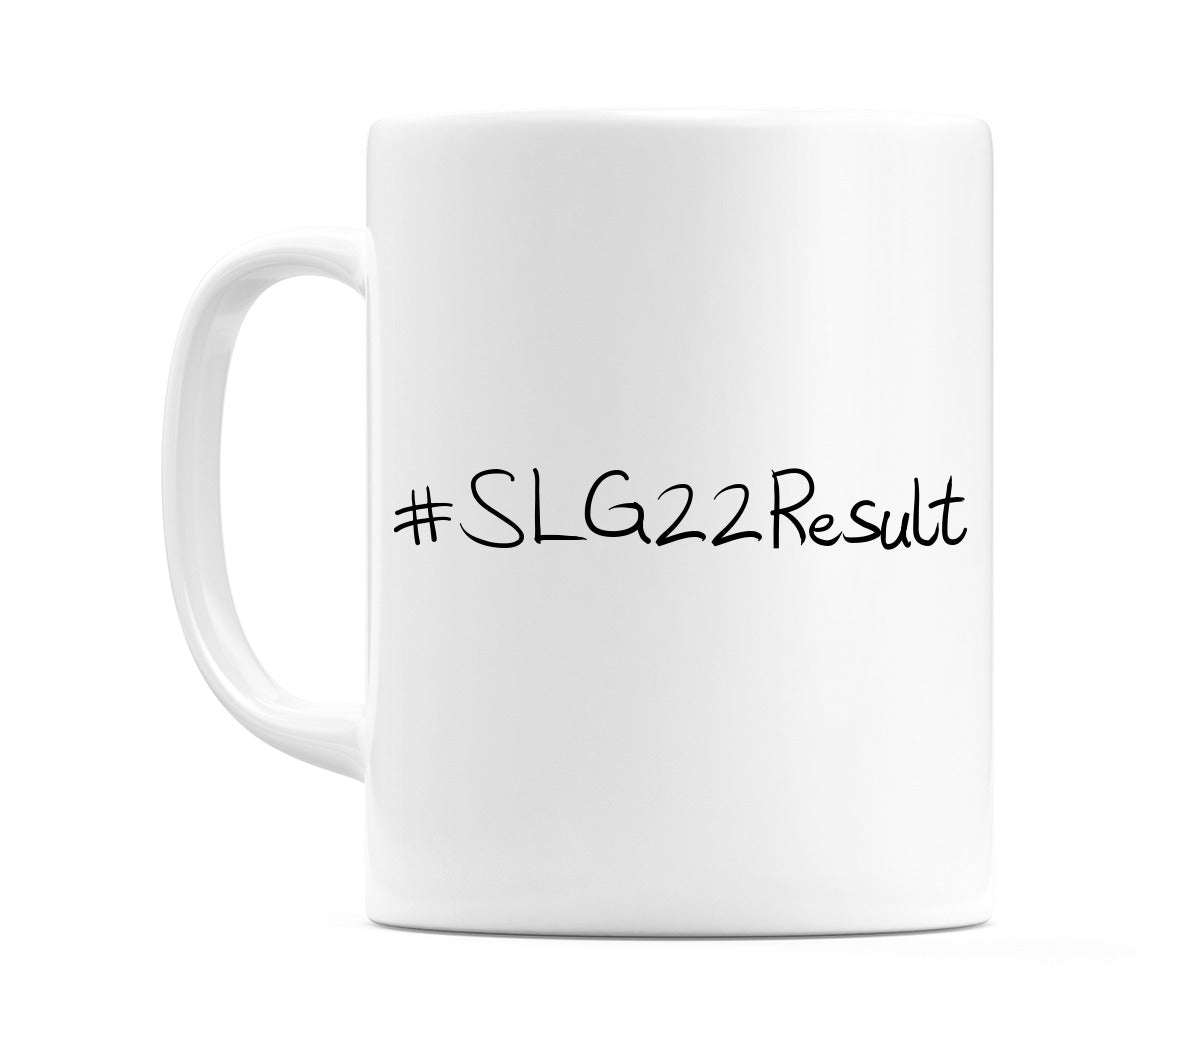 #SLG22Result Mug